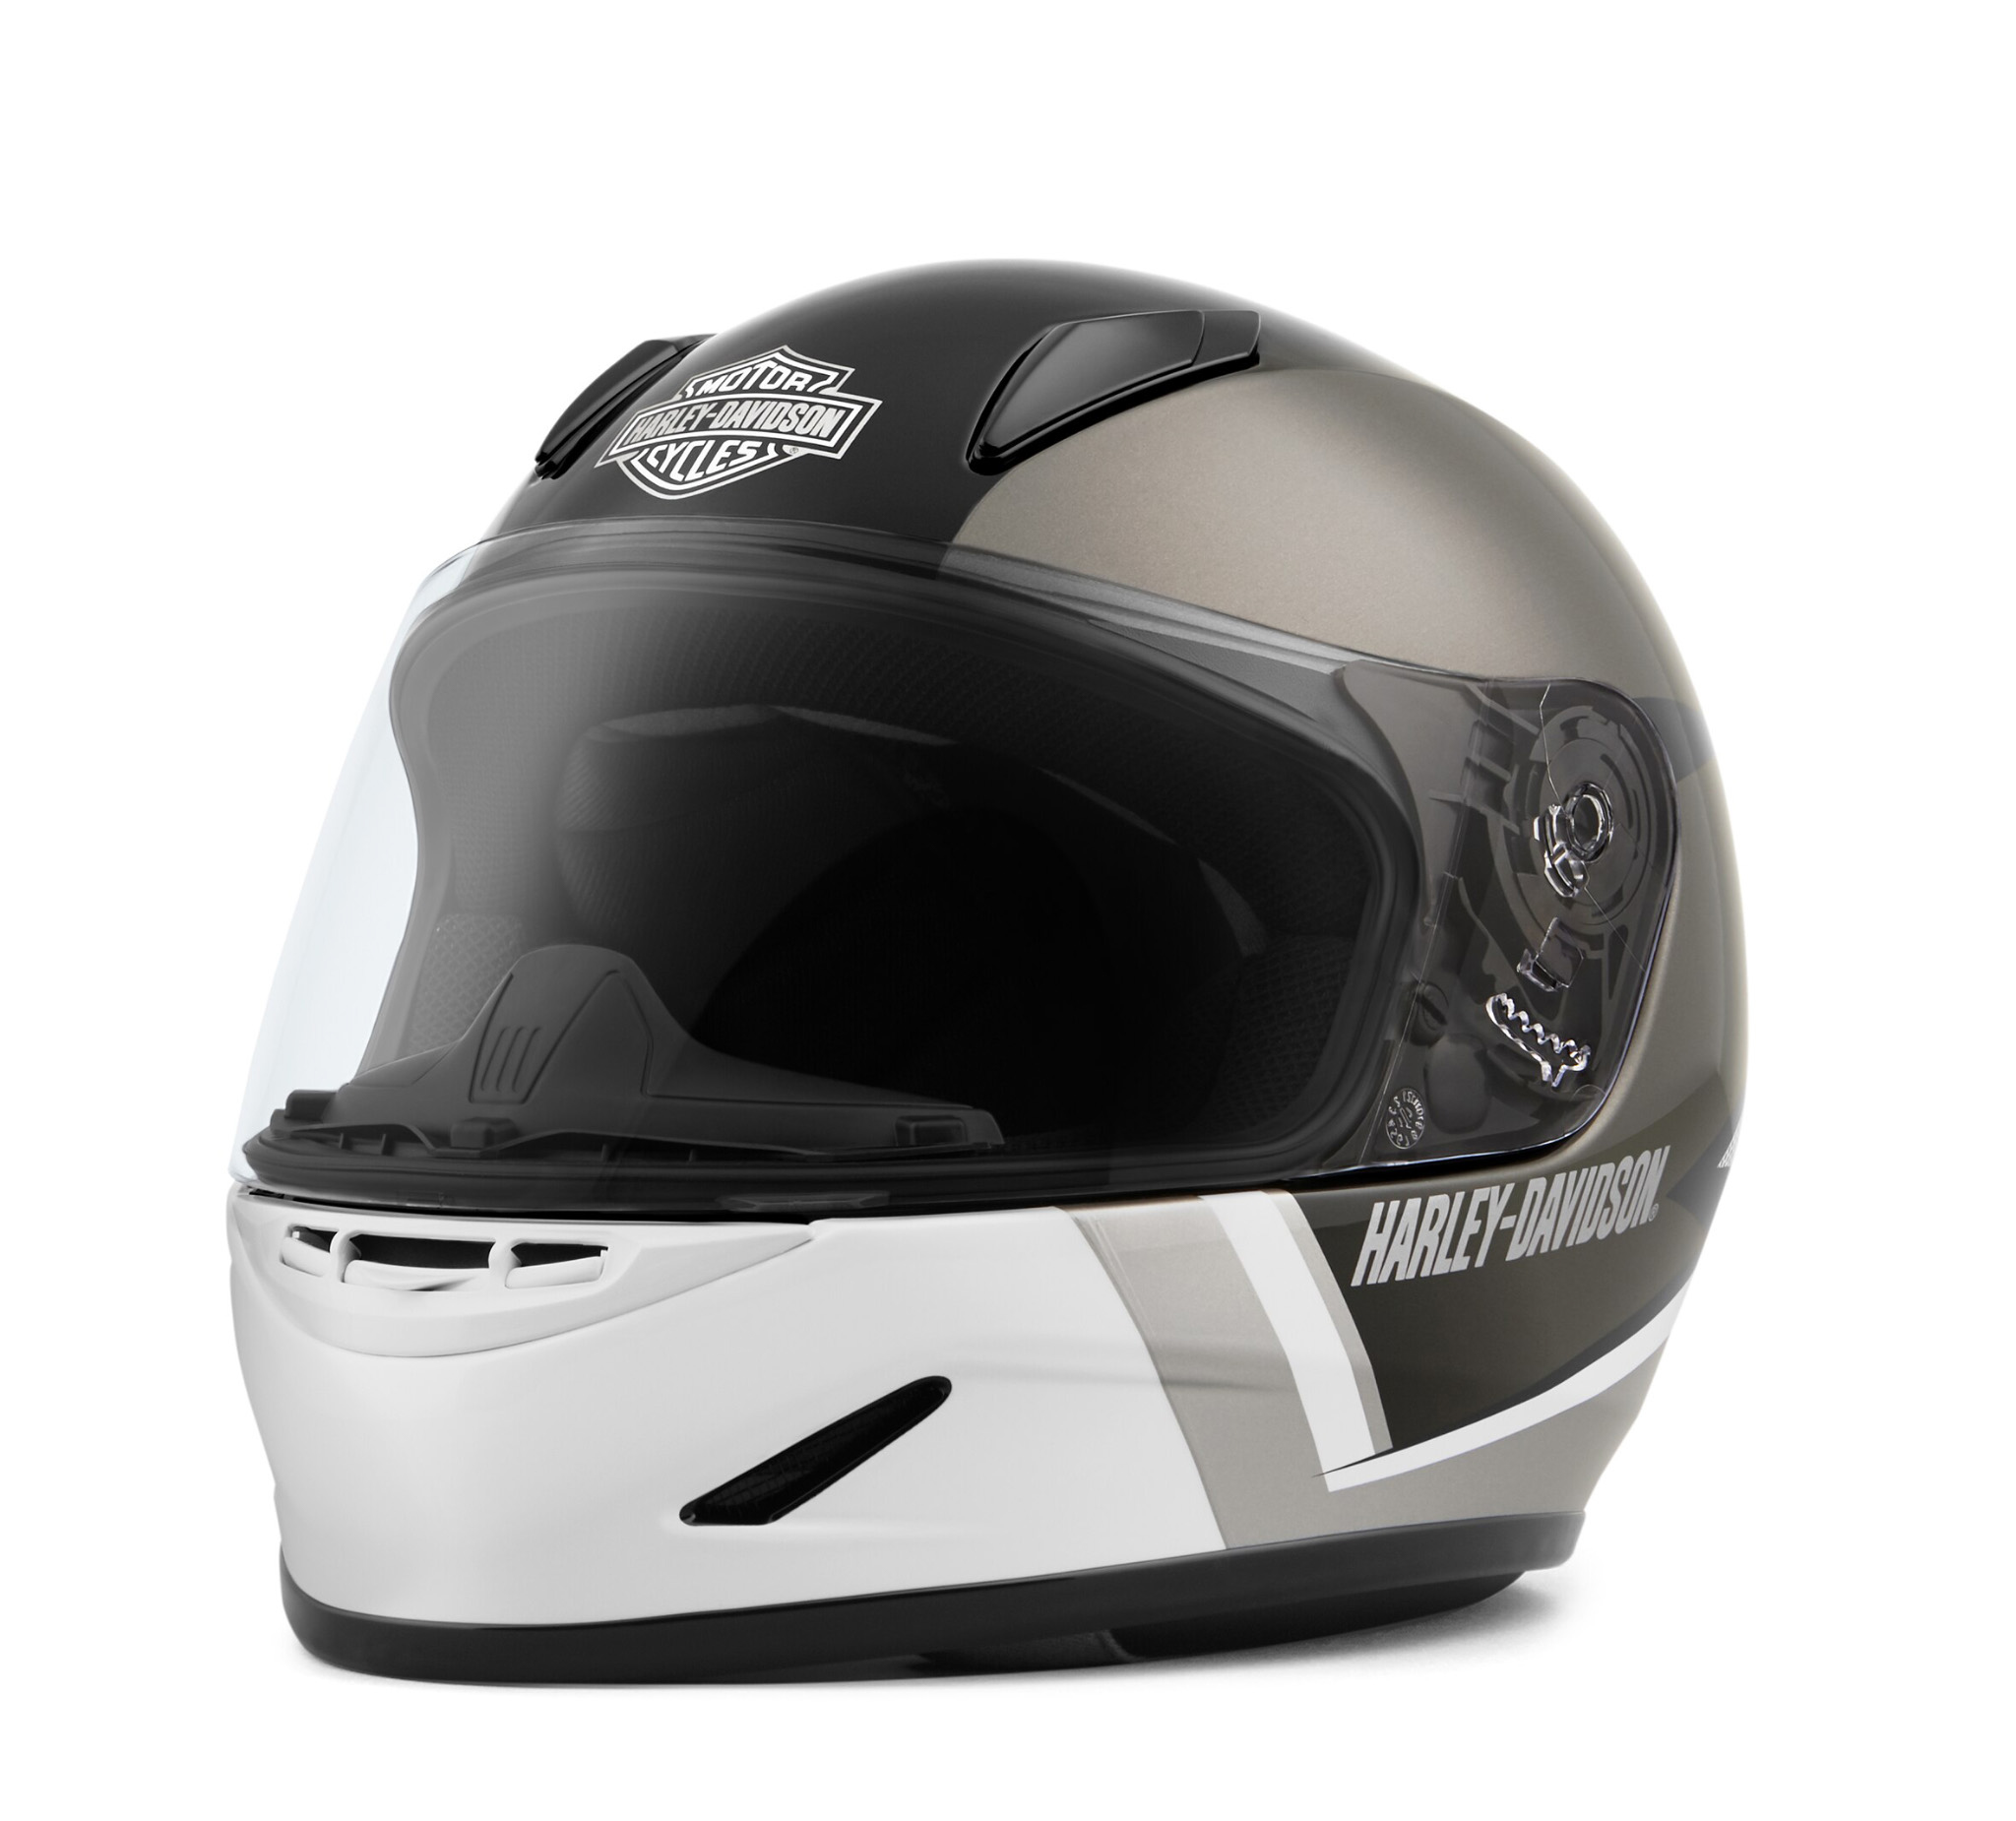 Three Innovative Options To Wear For Added Comfort Harley Davidson Pilot Ii 3 In 1 X04 Helmet Harley Davidson Helmets Helmet Custom Motorcycle Helmets